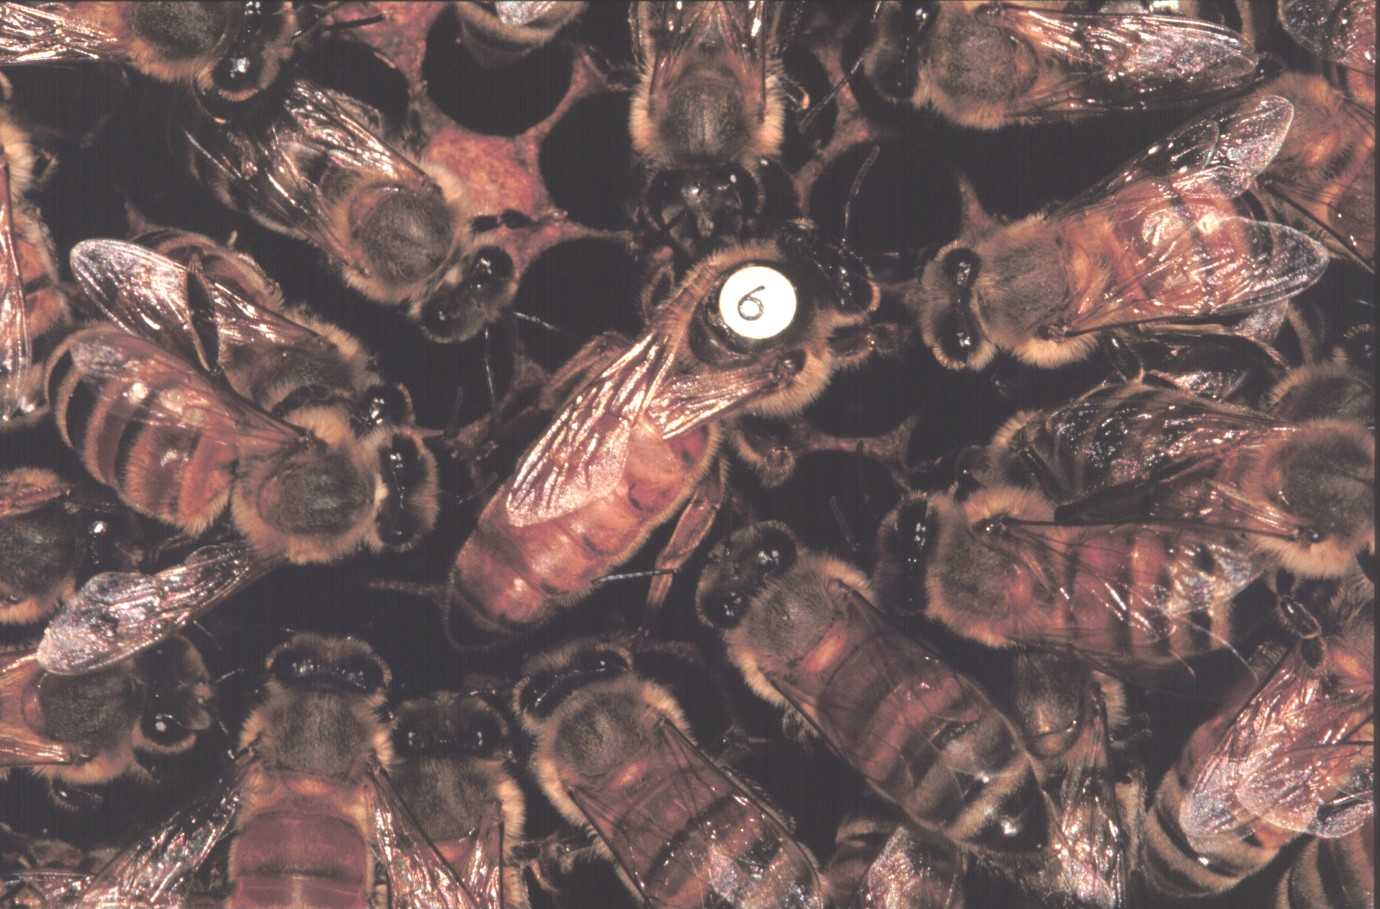 A honey bee queen and her court